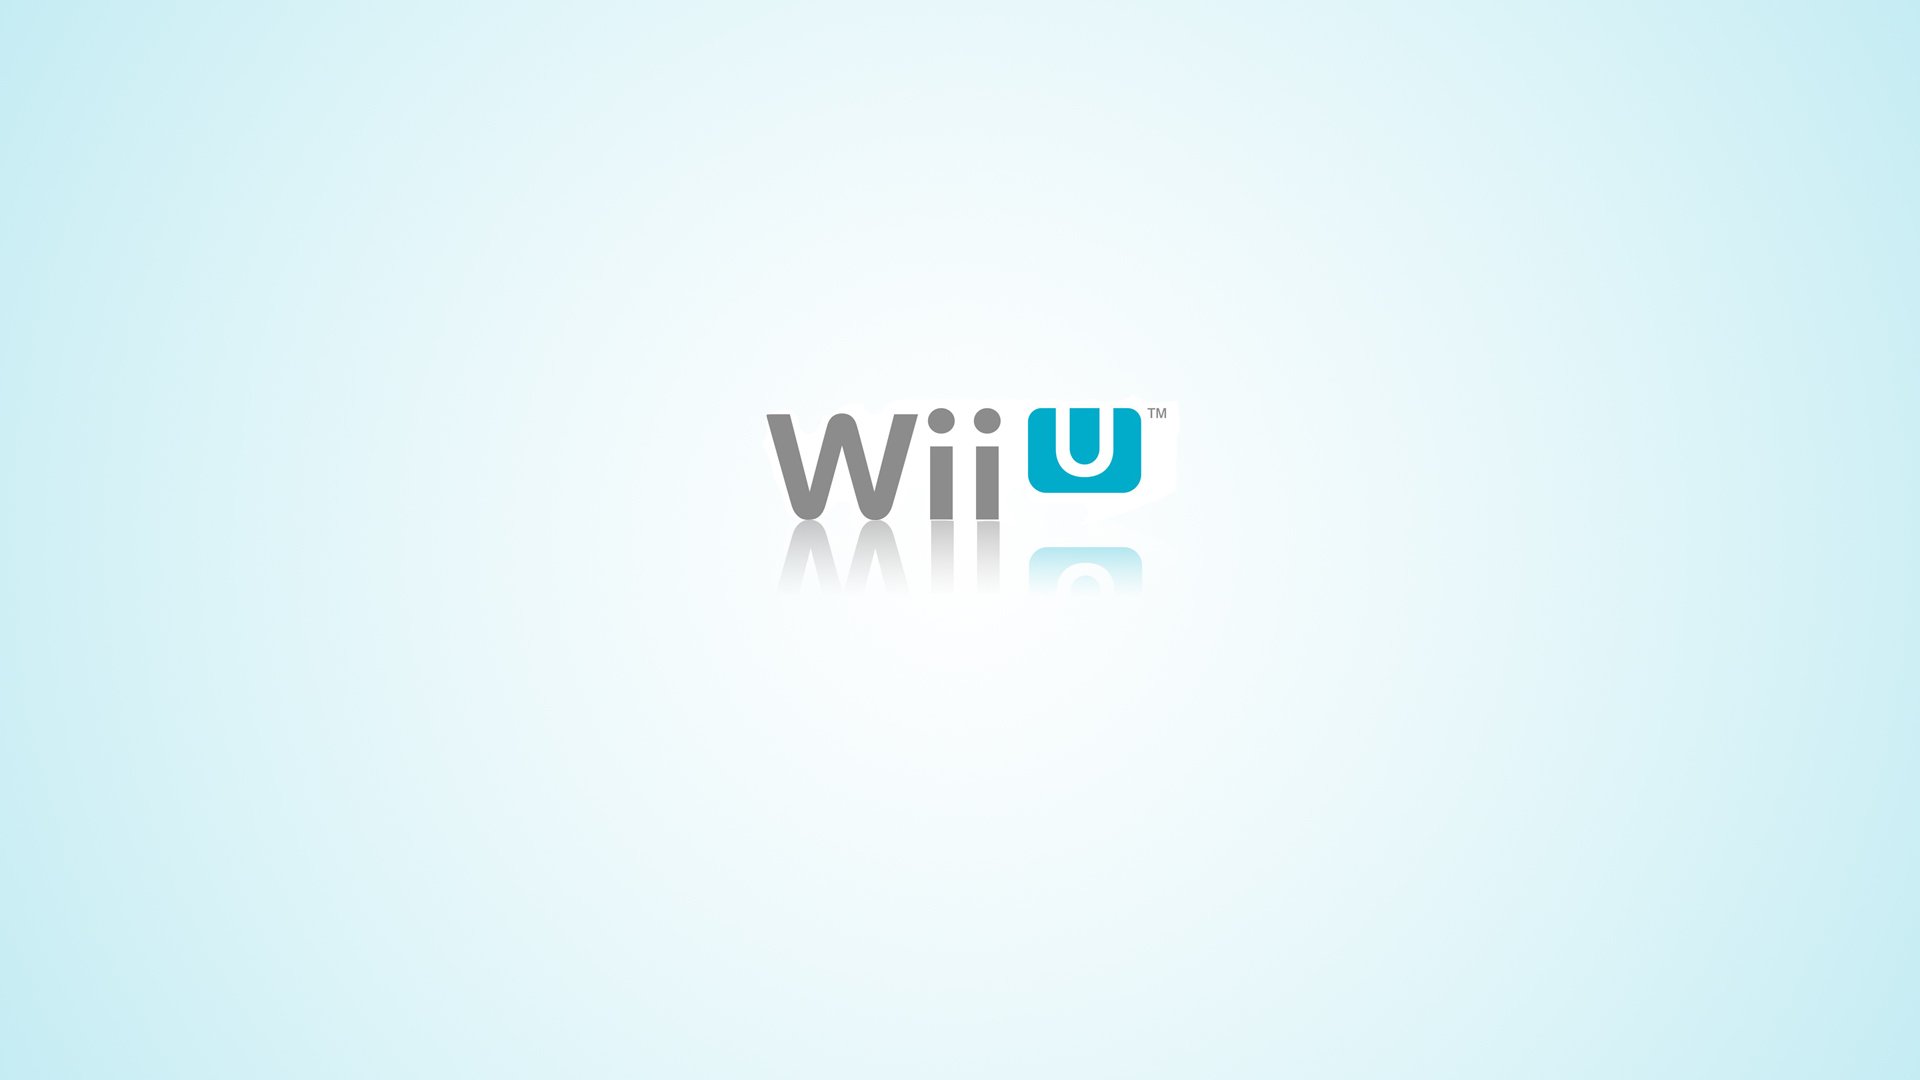 Wii-U desktop wallpaper showcasing the Nintendo Wii U console.